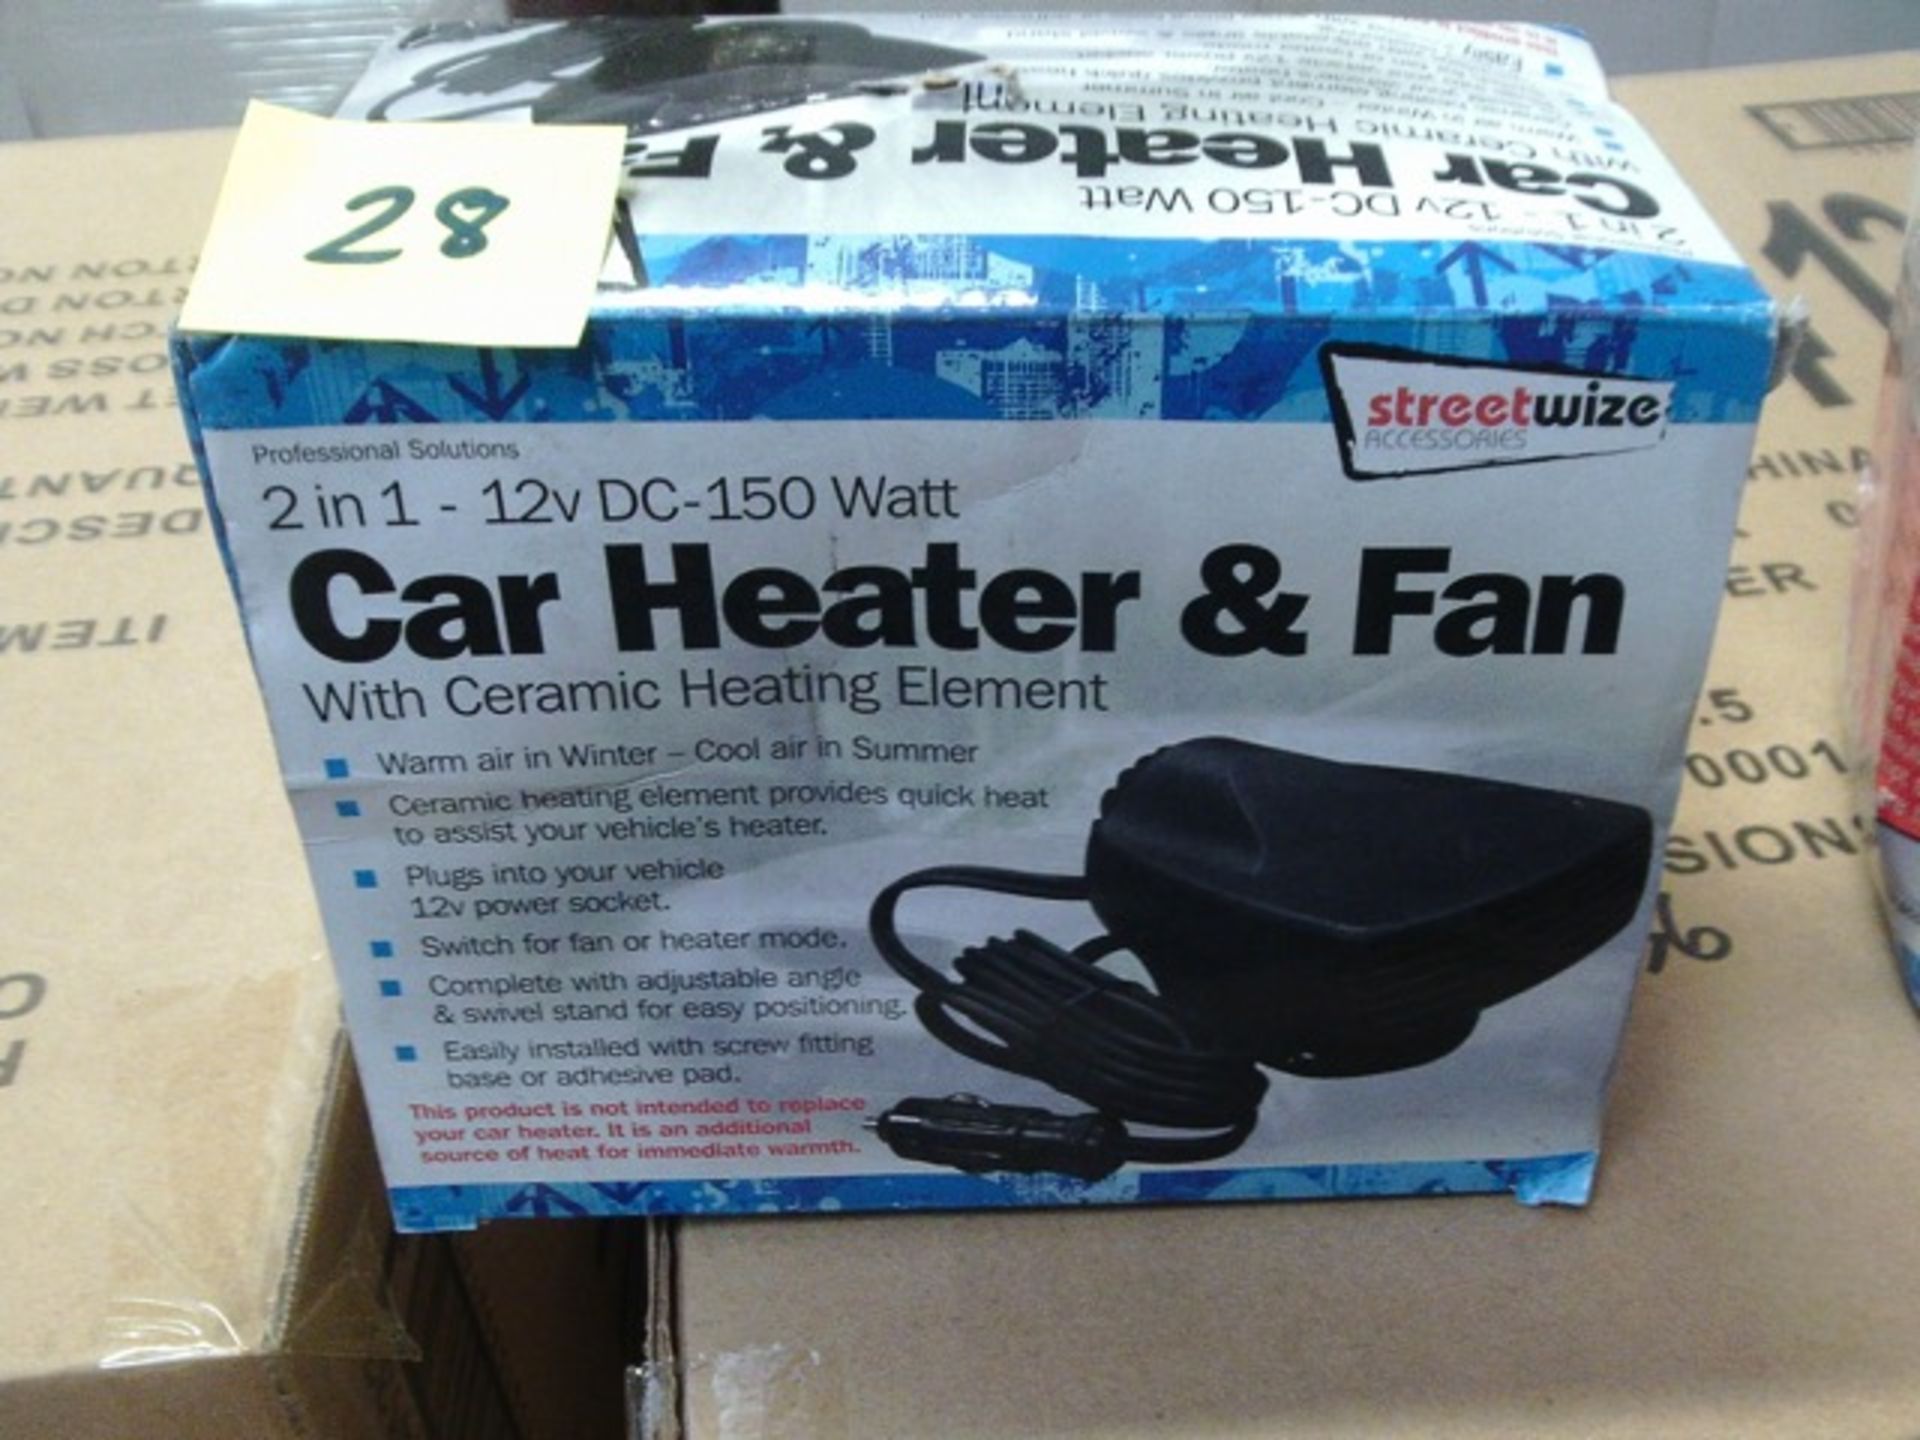 Streetwise dual car heater and fan -